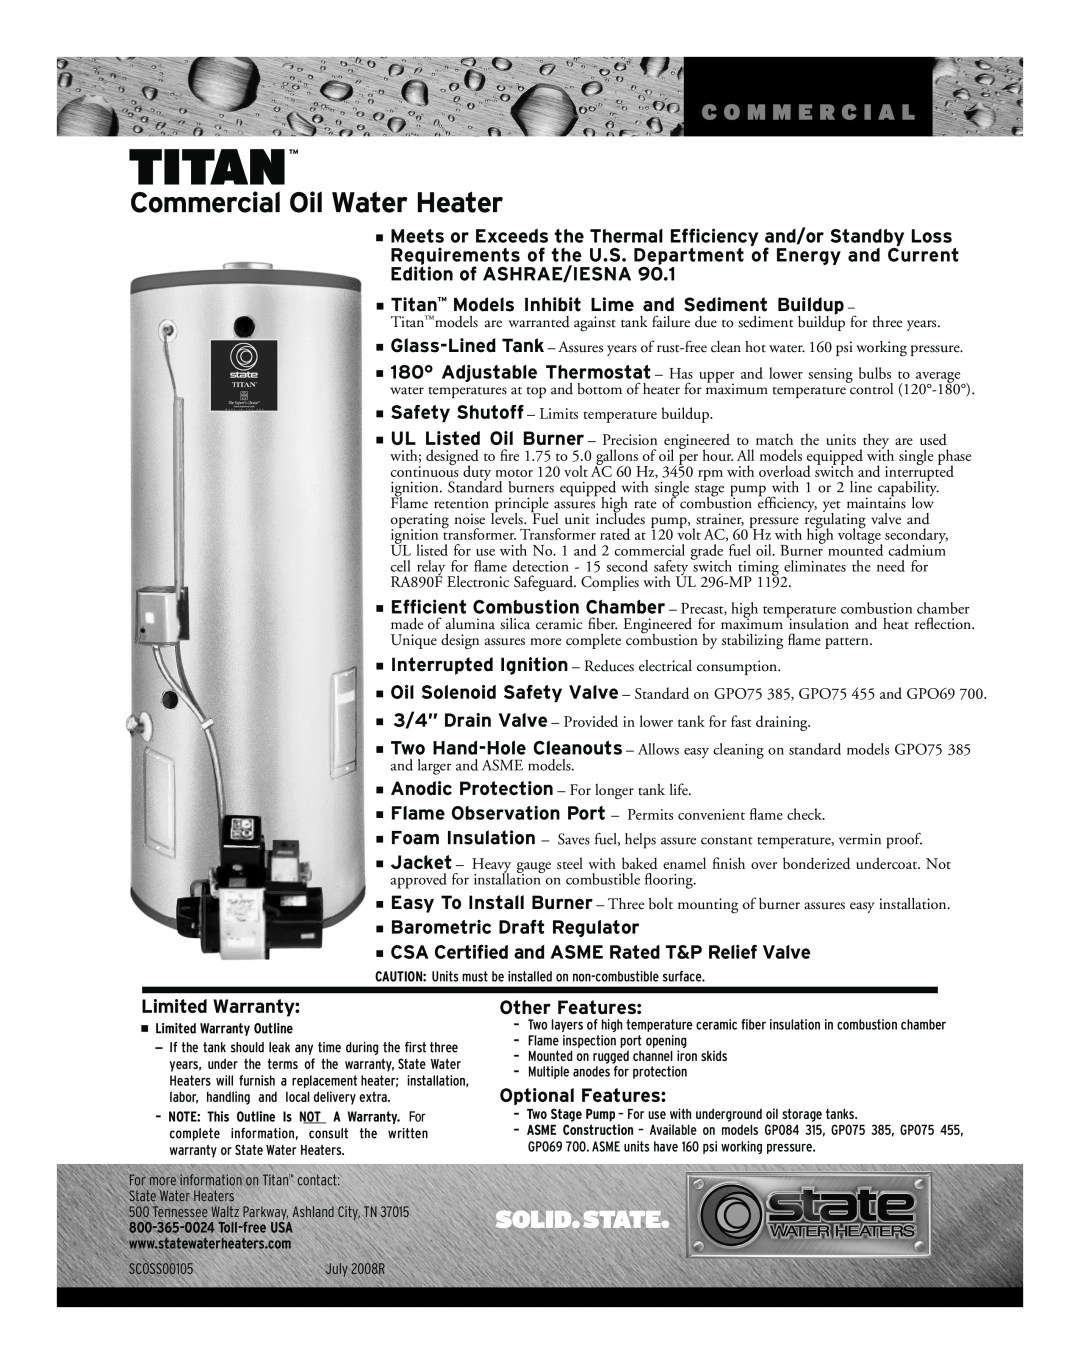 State Industries GPO75 455 warranty Titan, Commercial Oil Water Heater, C O M M E R C I A L, Edition of ASHRAE/IESNA 